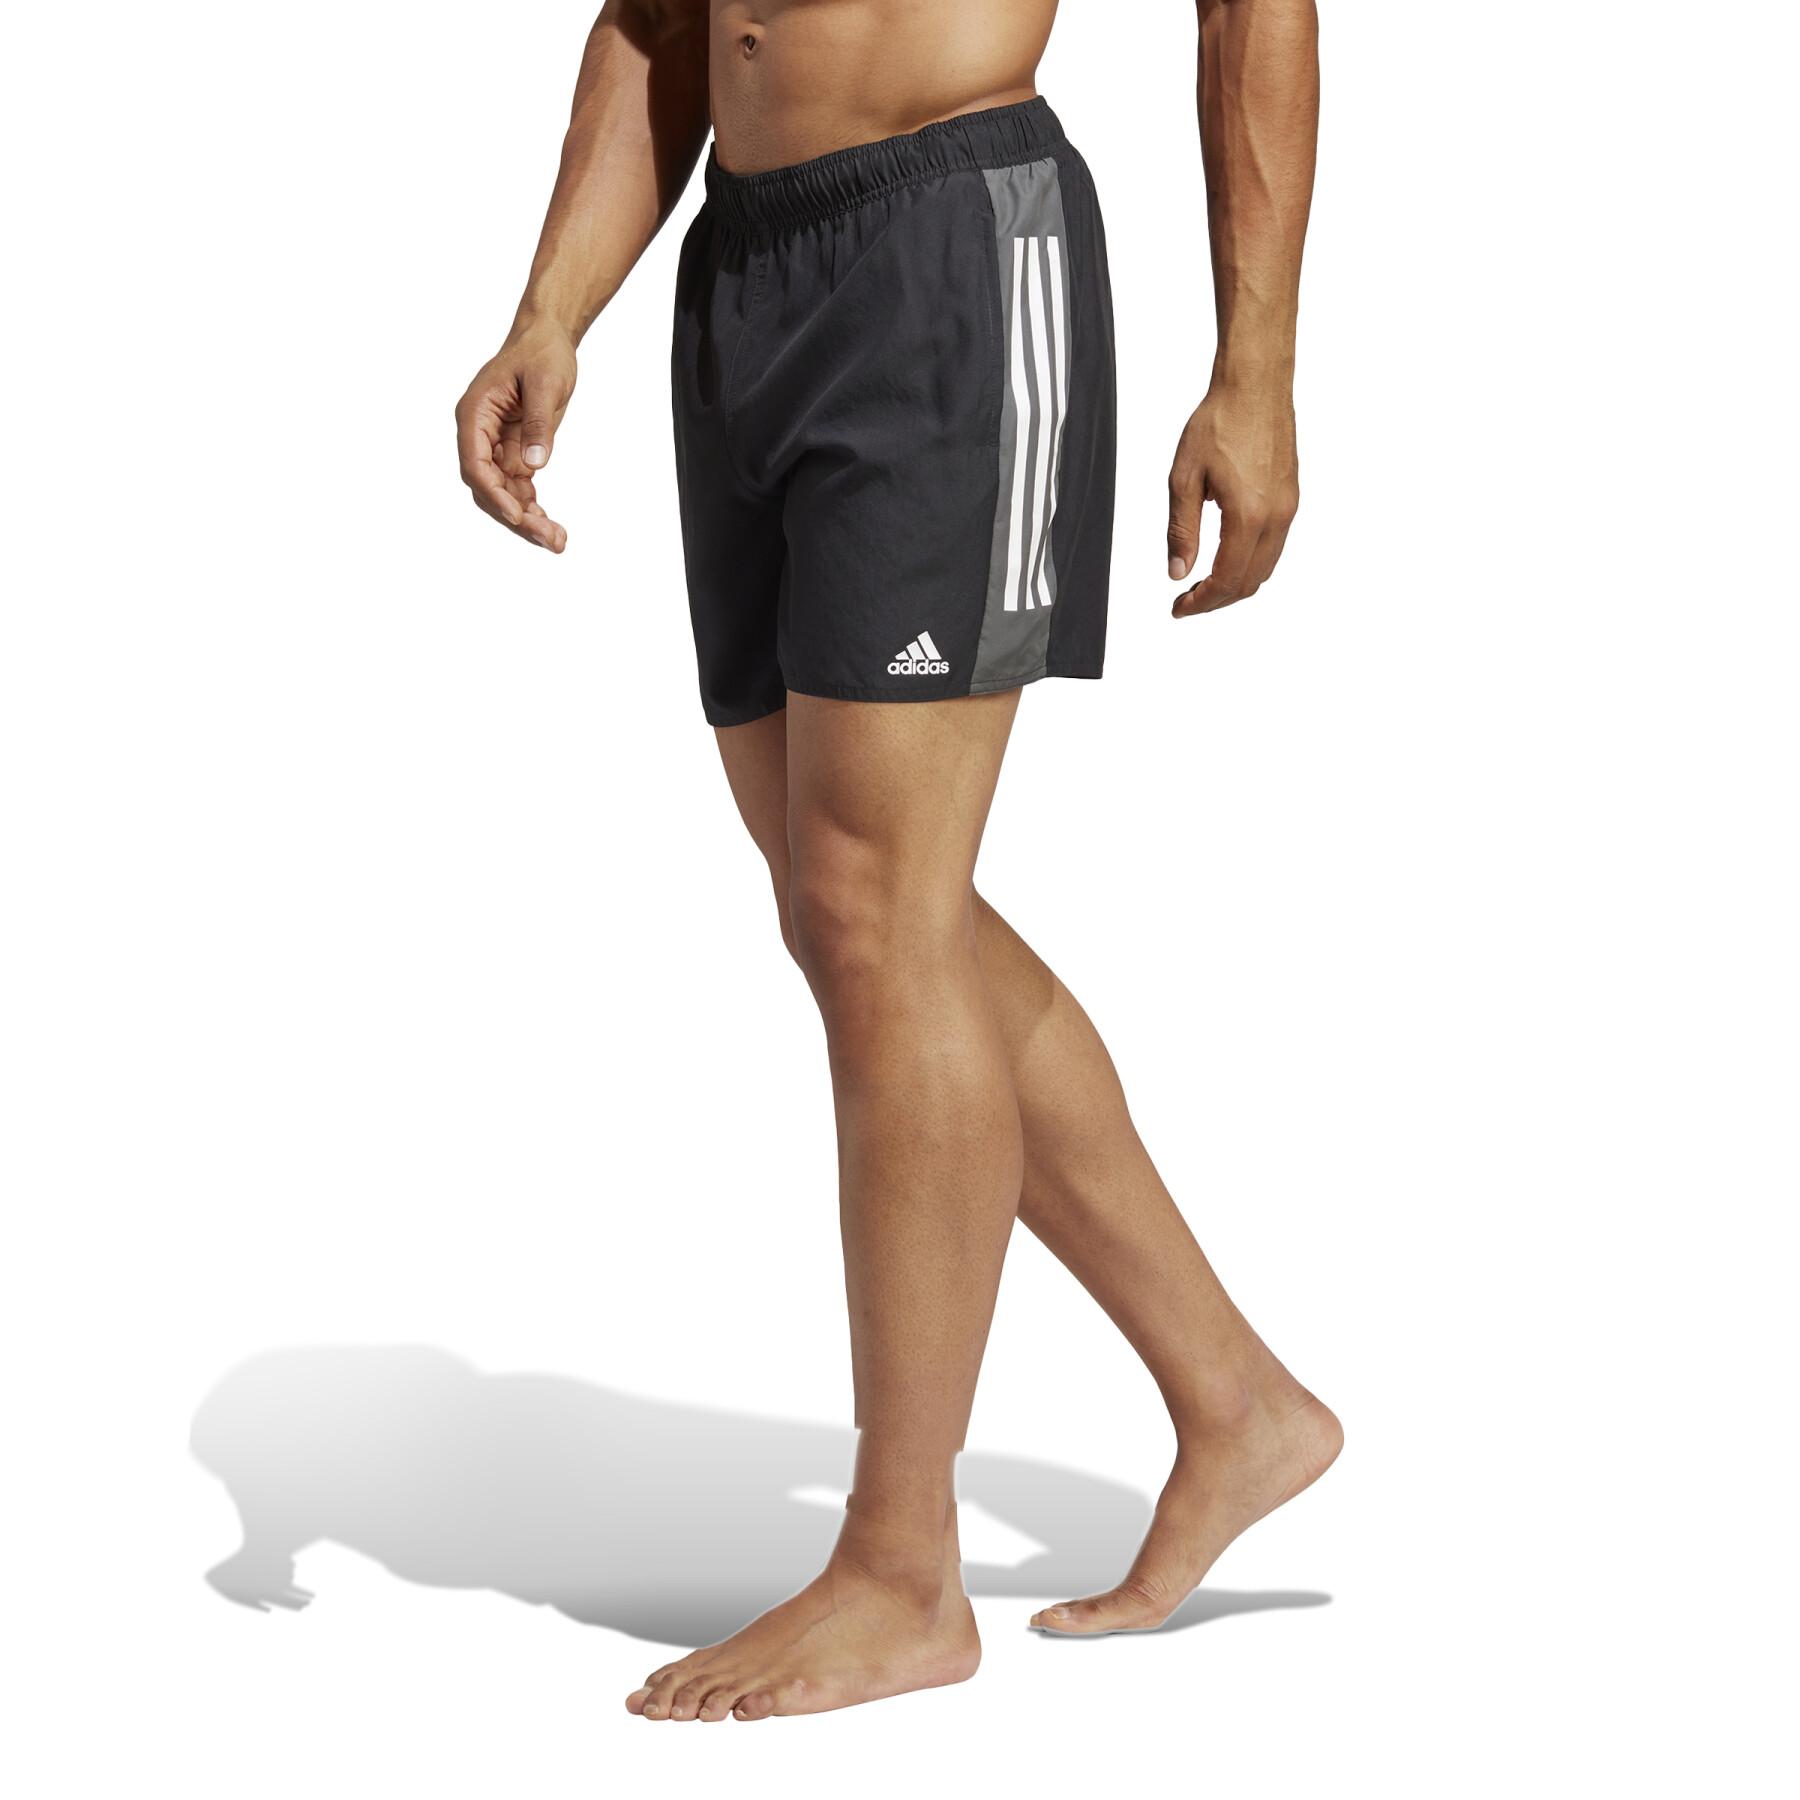 Short swim shorts with 3 stripes adidas Colorblock